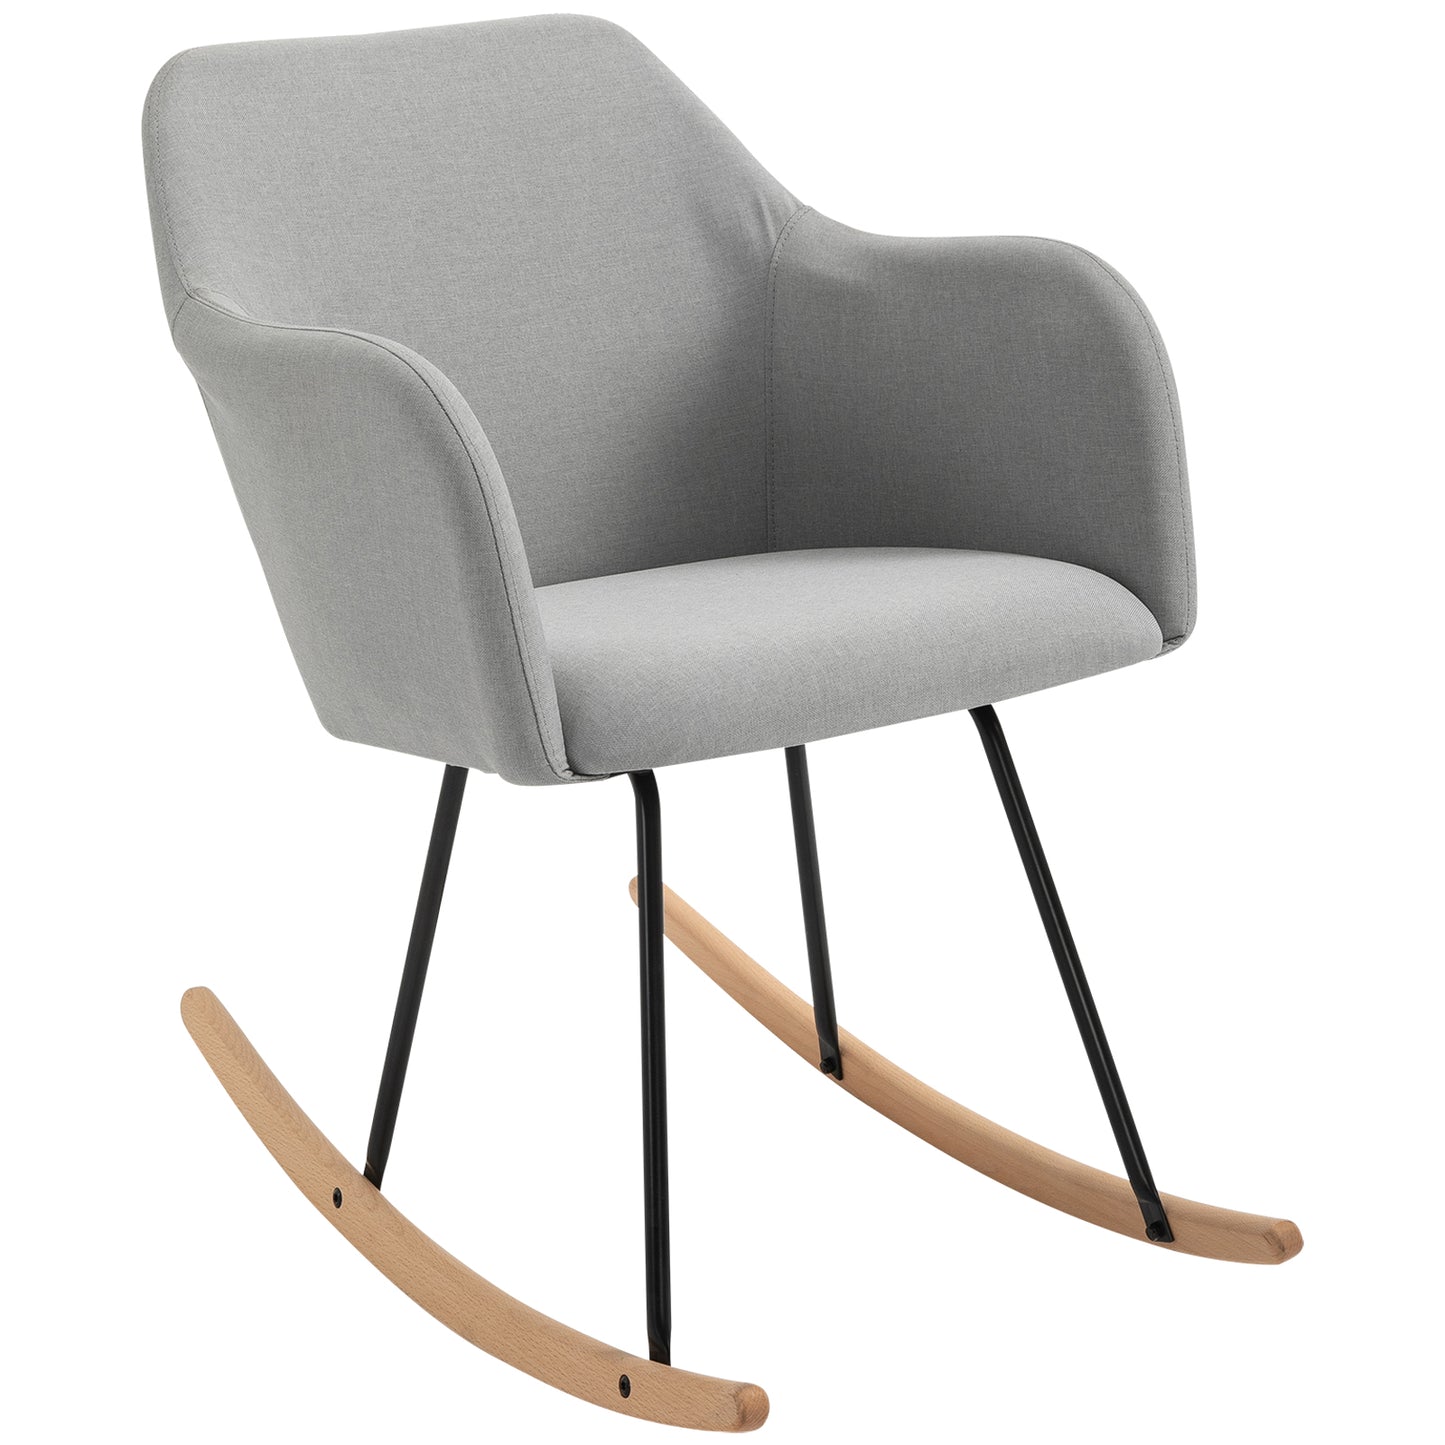 HOMCOM Polyester Linen Upholstered Rocking Armchair Indoor Rocking Chair Light Grey